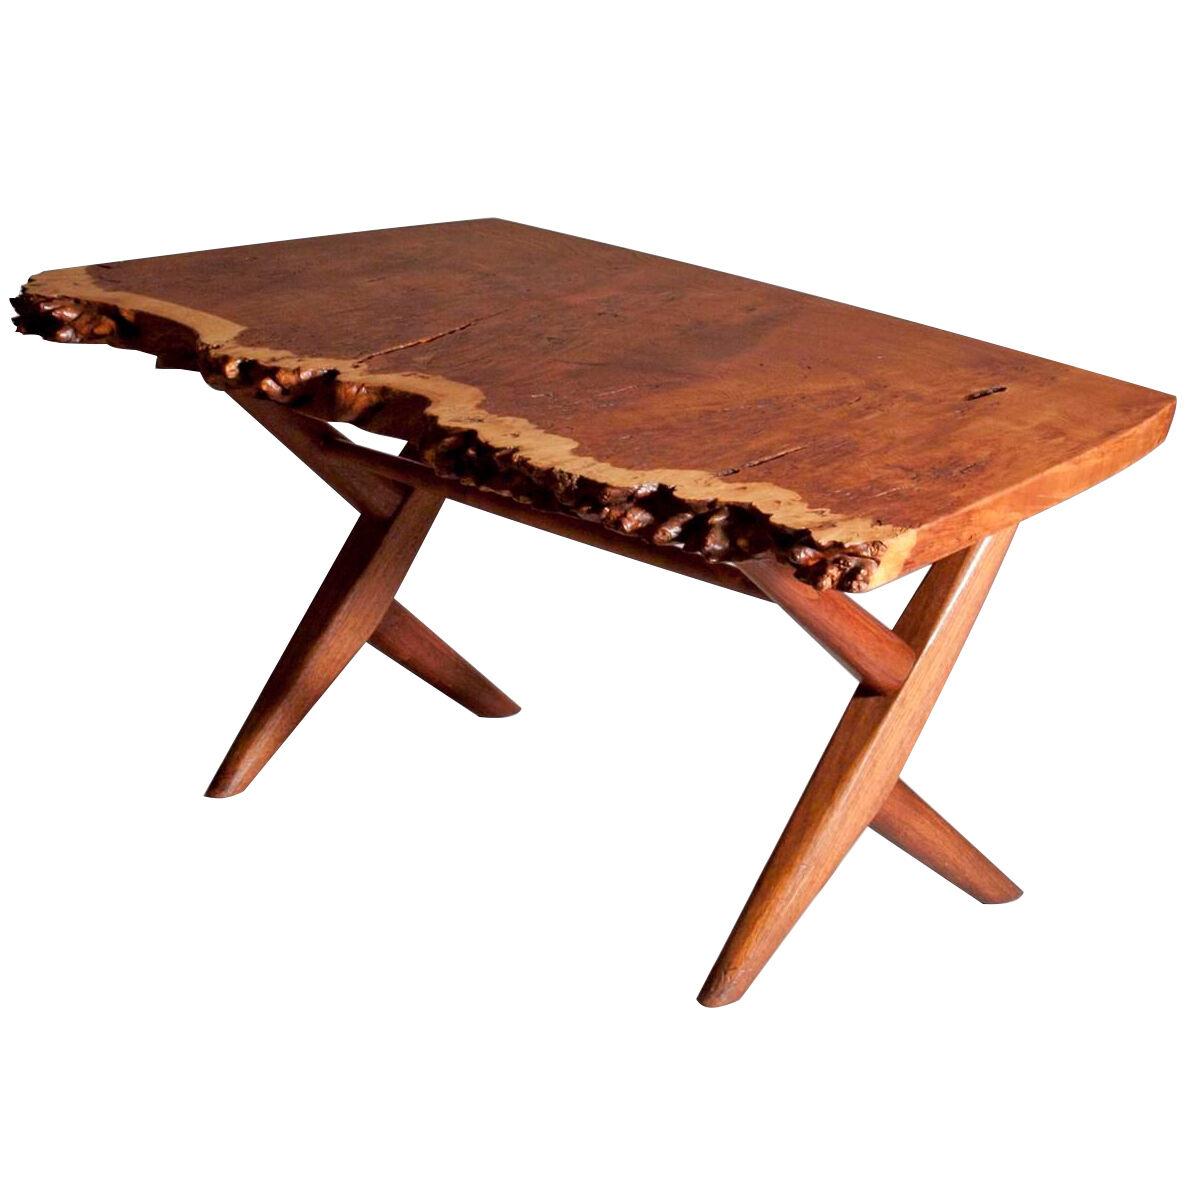 Burl English Oak Table with Conoid Base